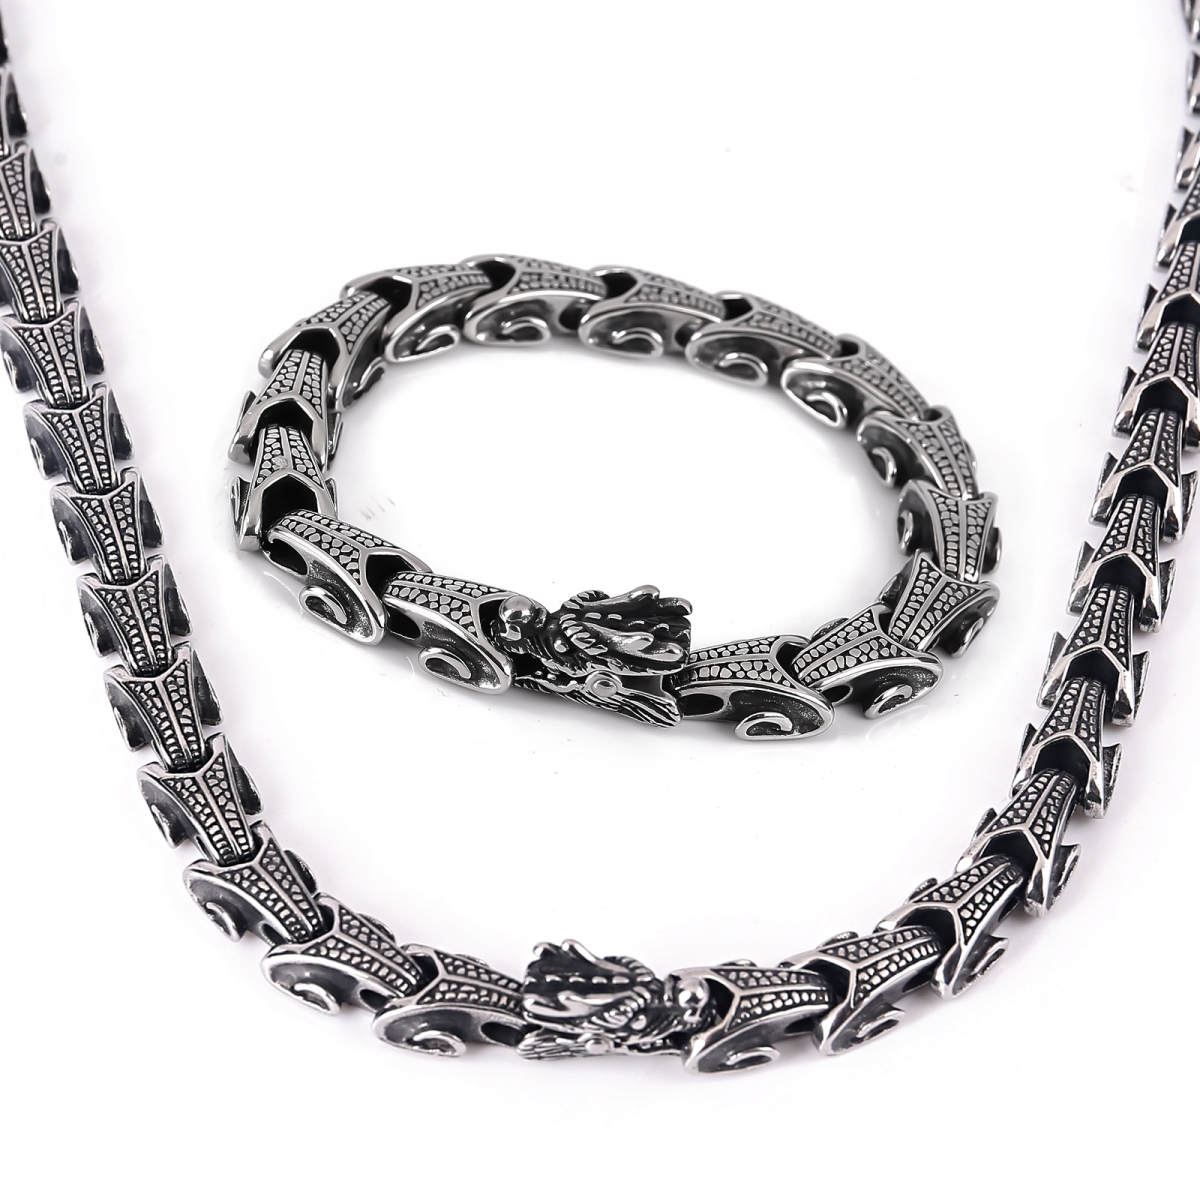 Dragon Chain Set US$25/Set-NORSECOLLECTION- Viking Jewelry,Viking Necklace,Viking Bracelet,Viking Rings,Viking Mugs,Viking Accessories,Viking Crafts